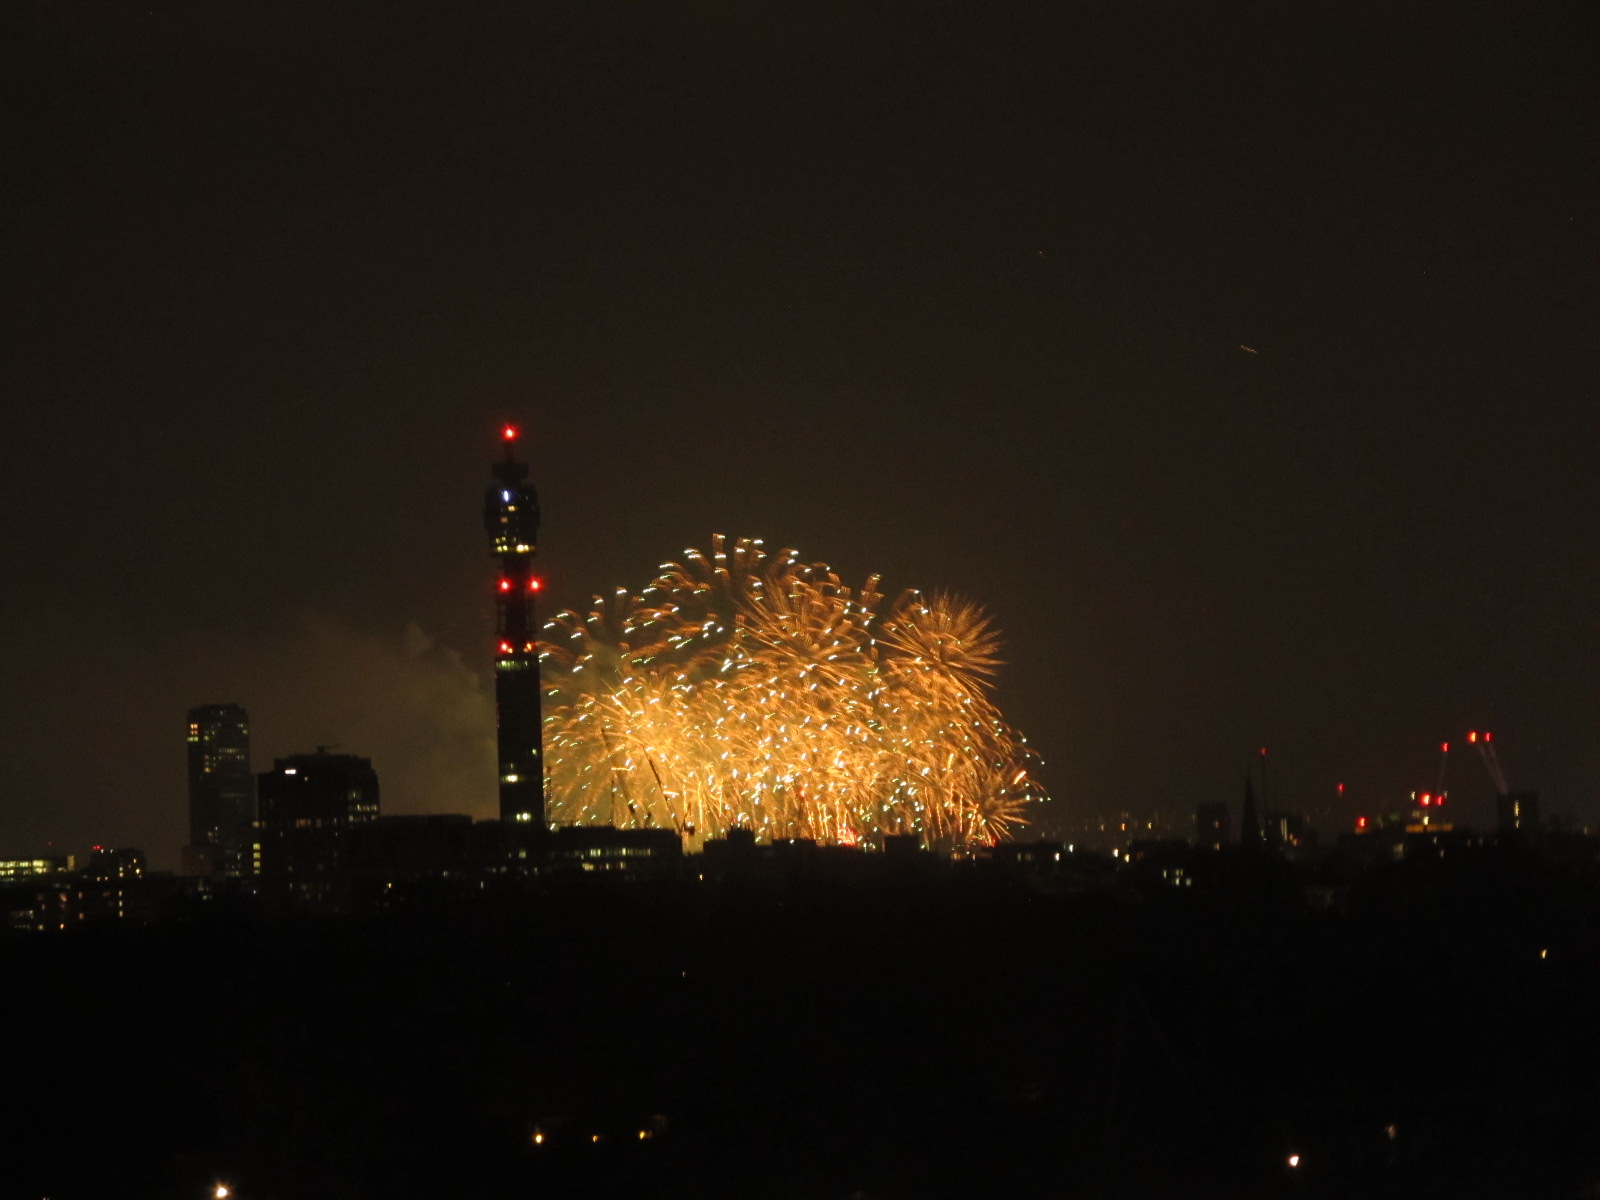 London Eye fireworks seen from Primrose Hill viewpoint2